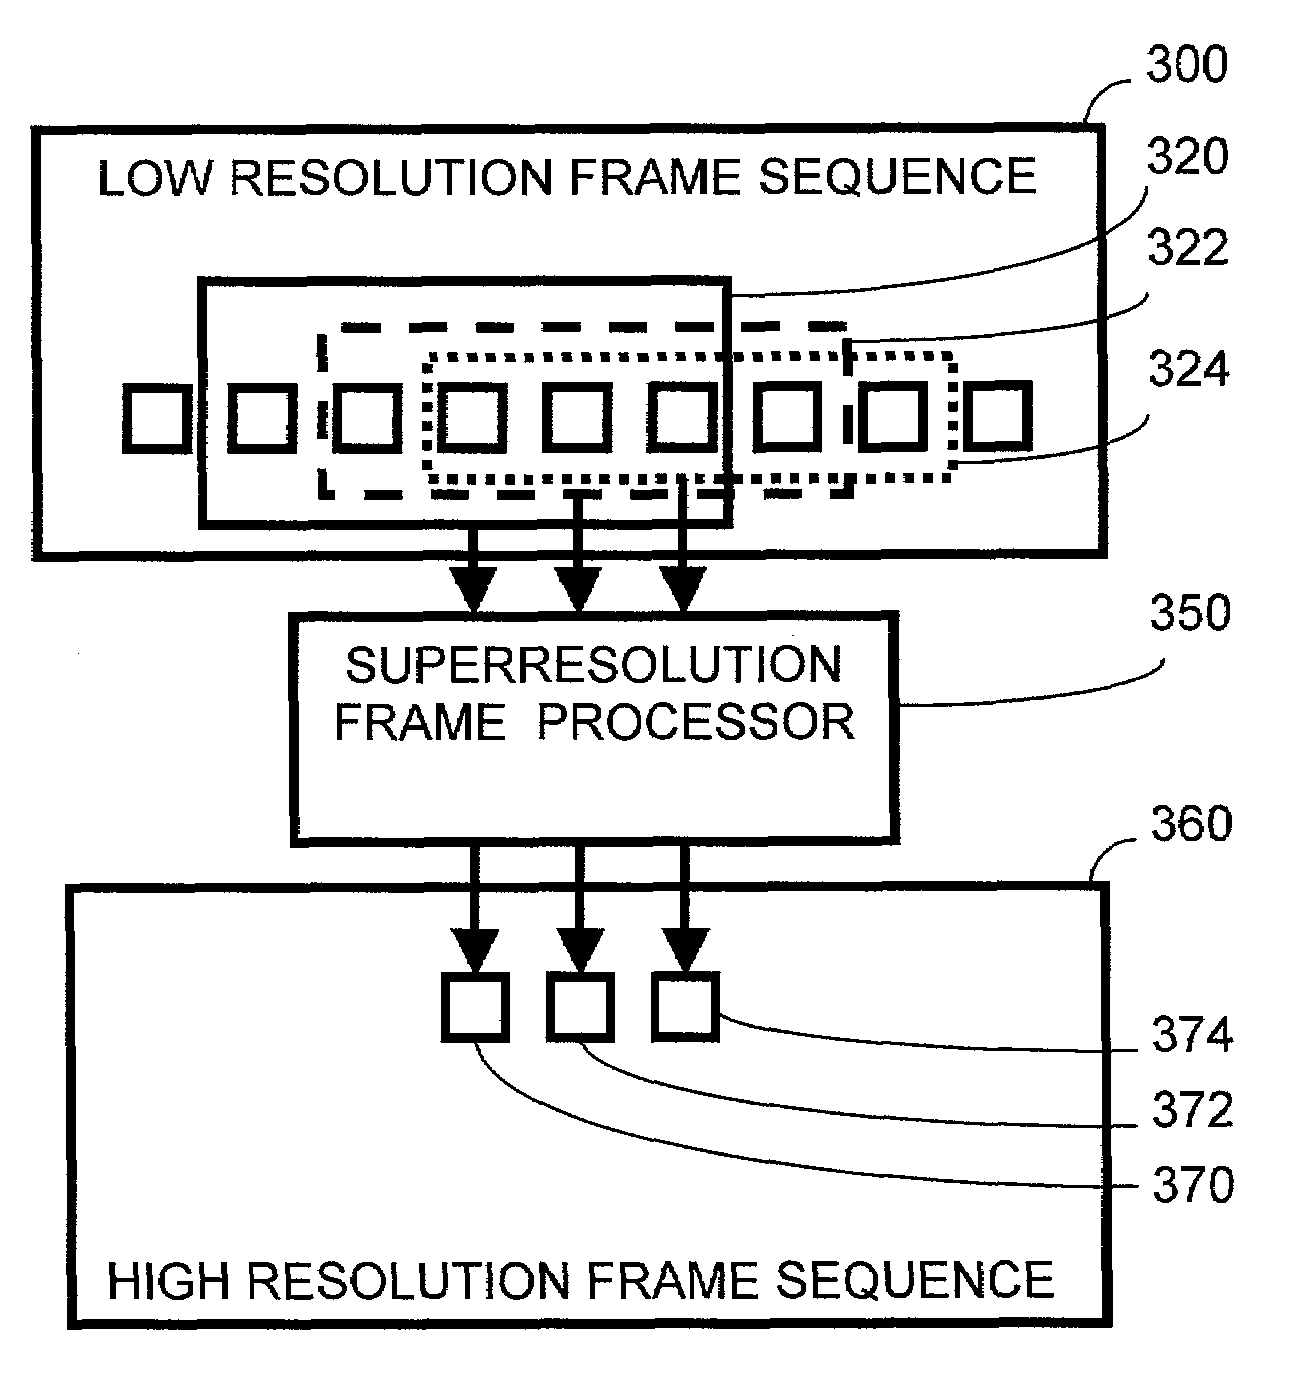 Enhanced resolution video construction method and apparatus